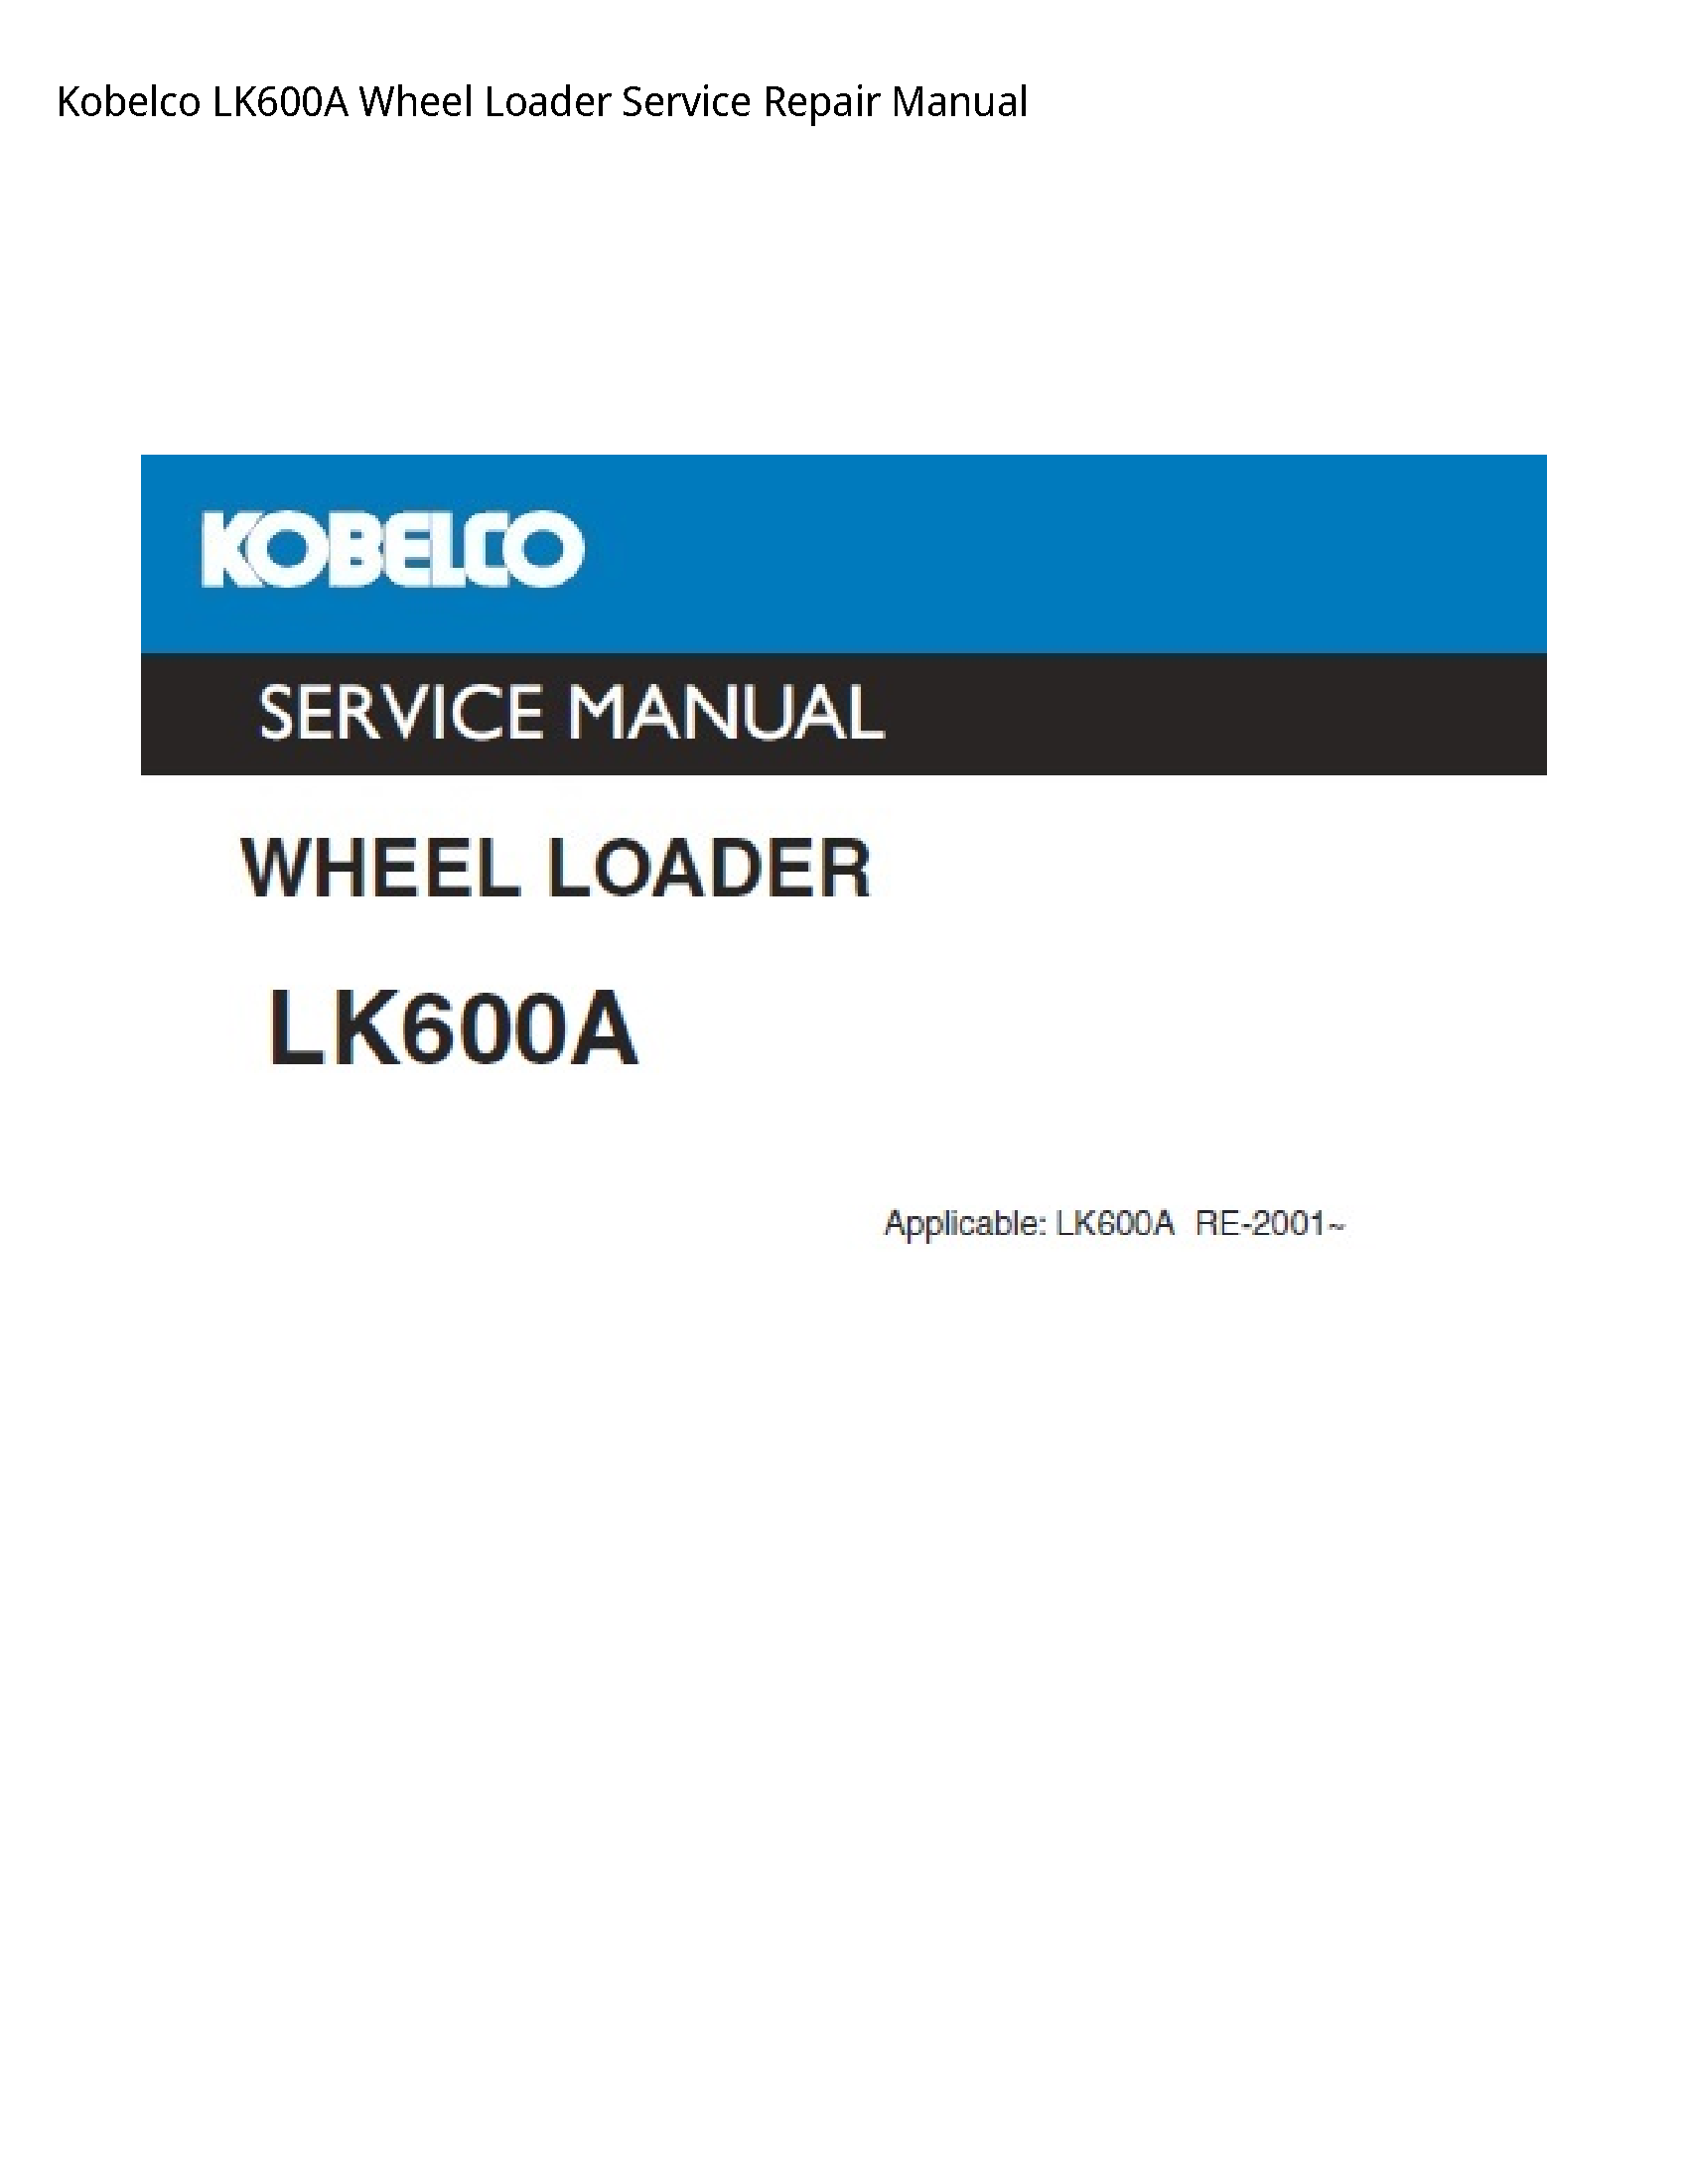 Kobelco LK600A Wheel Loader manual